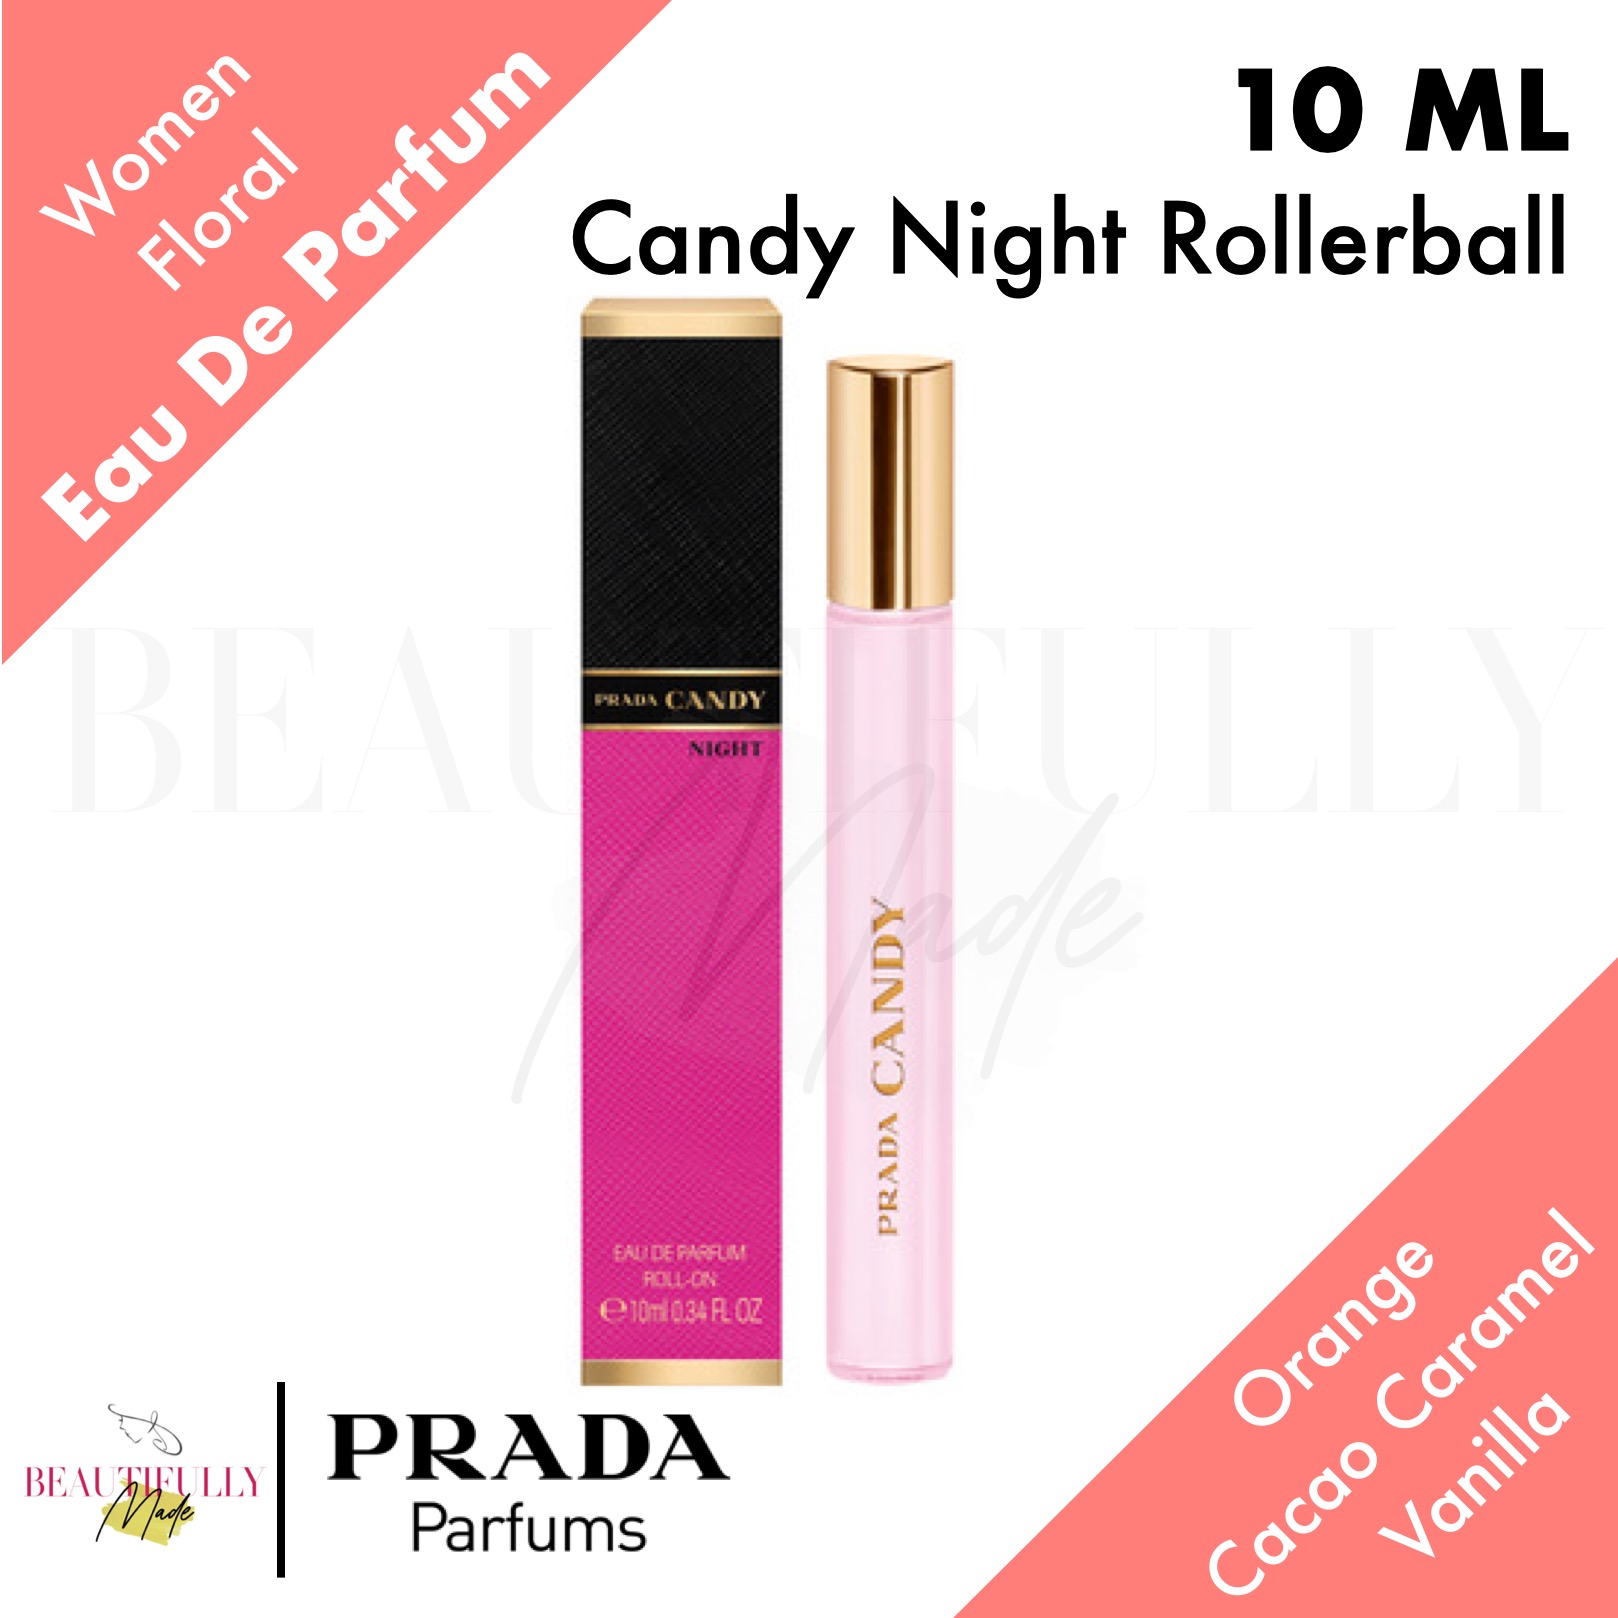 prada candy night rollerball